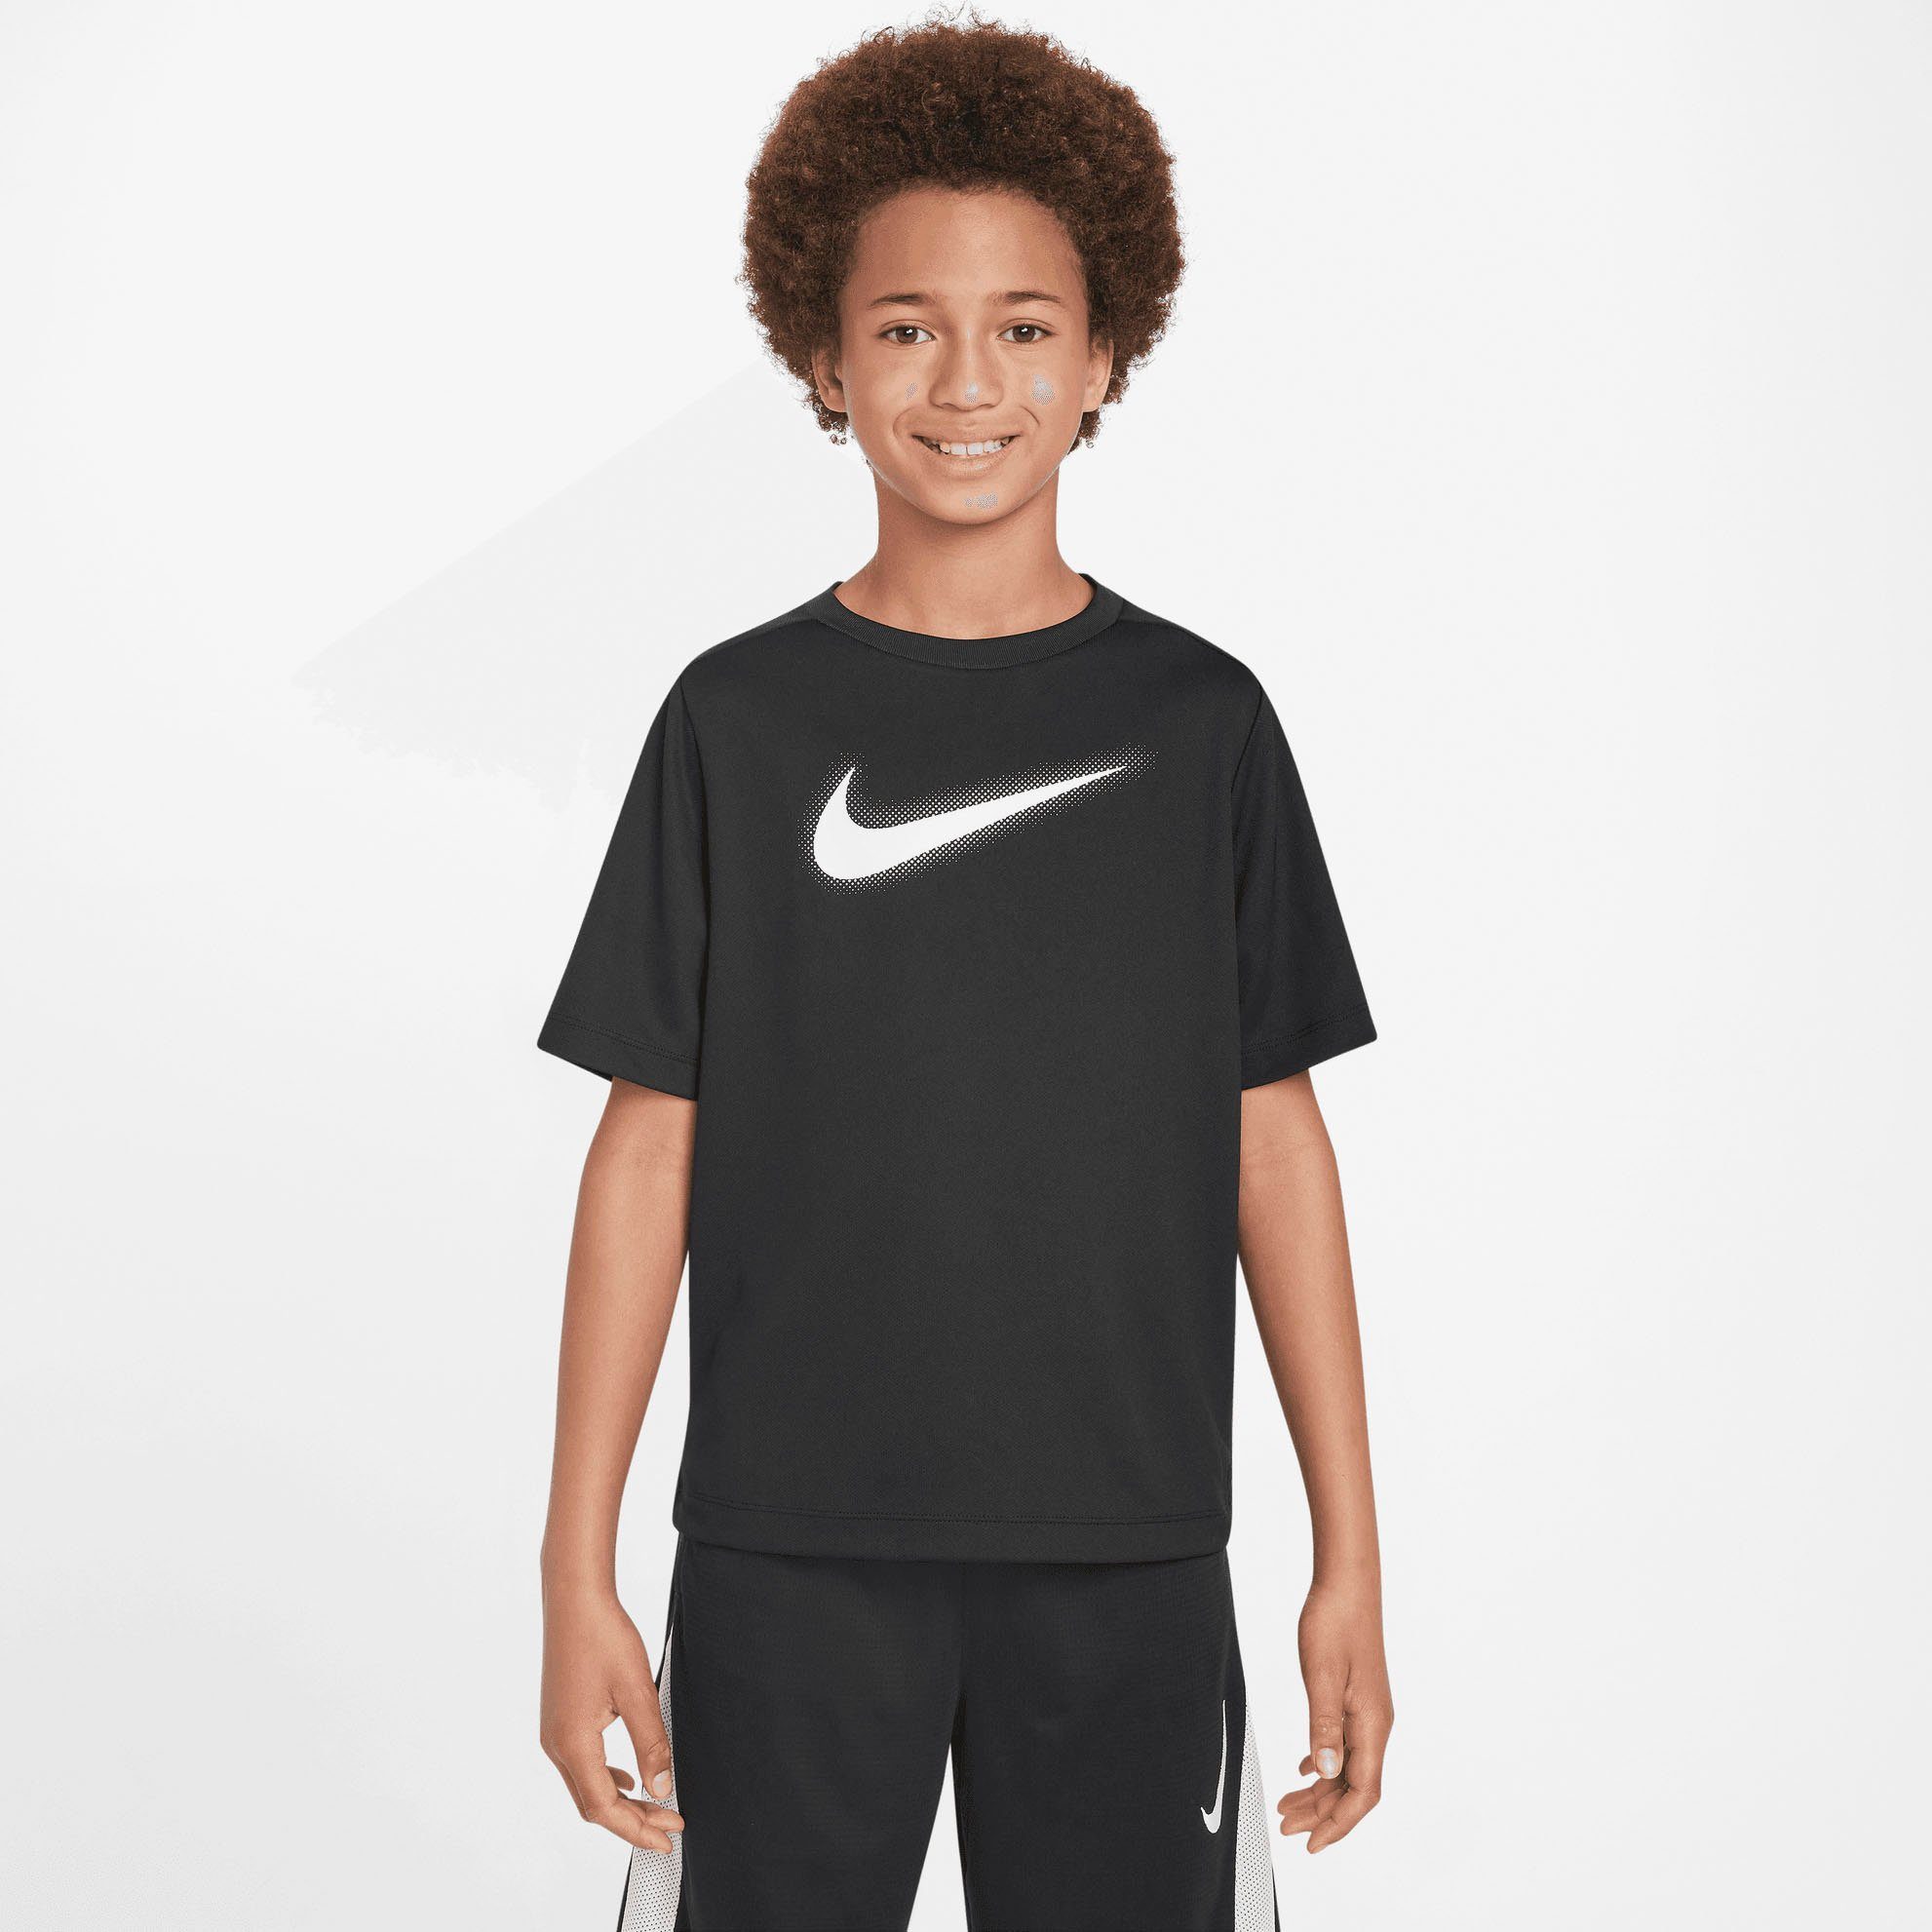 KIDS' (BOYS) TOP Trainingsshirt BLACK/WHITE BIG TRAINING GRAPHIC Nike MULTI+ DRI-FIT